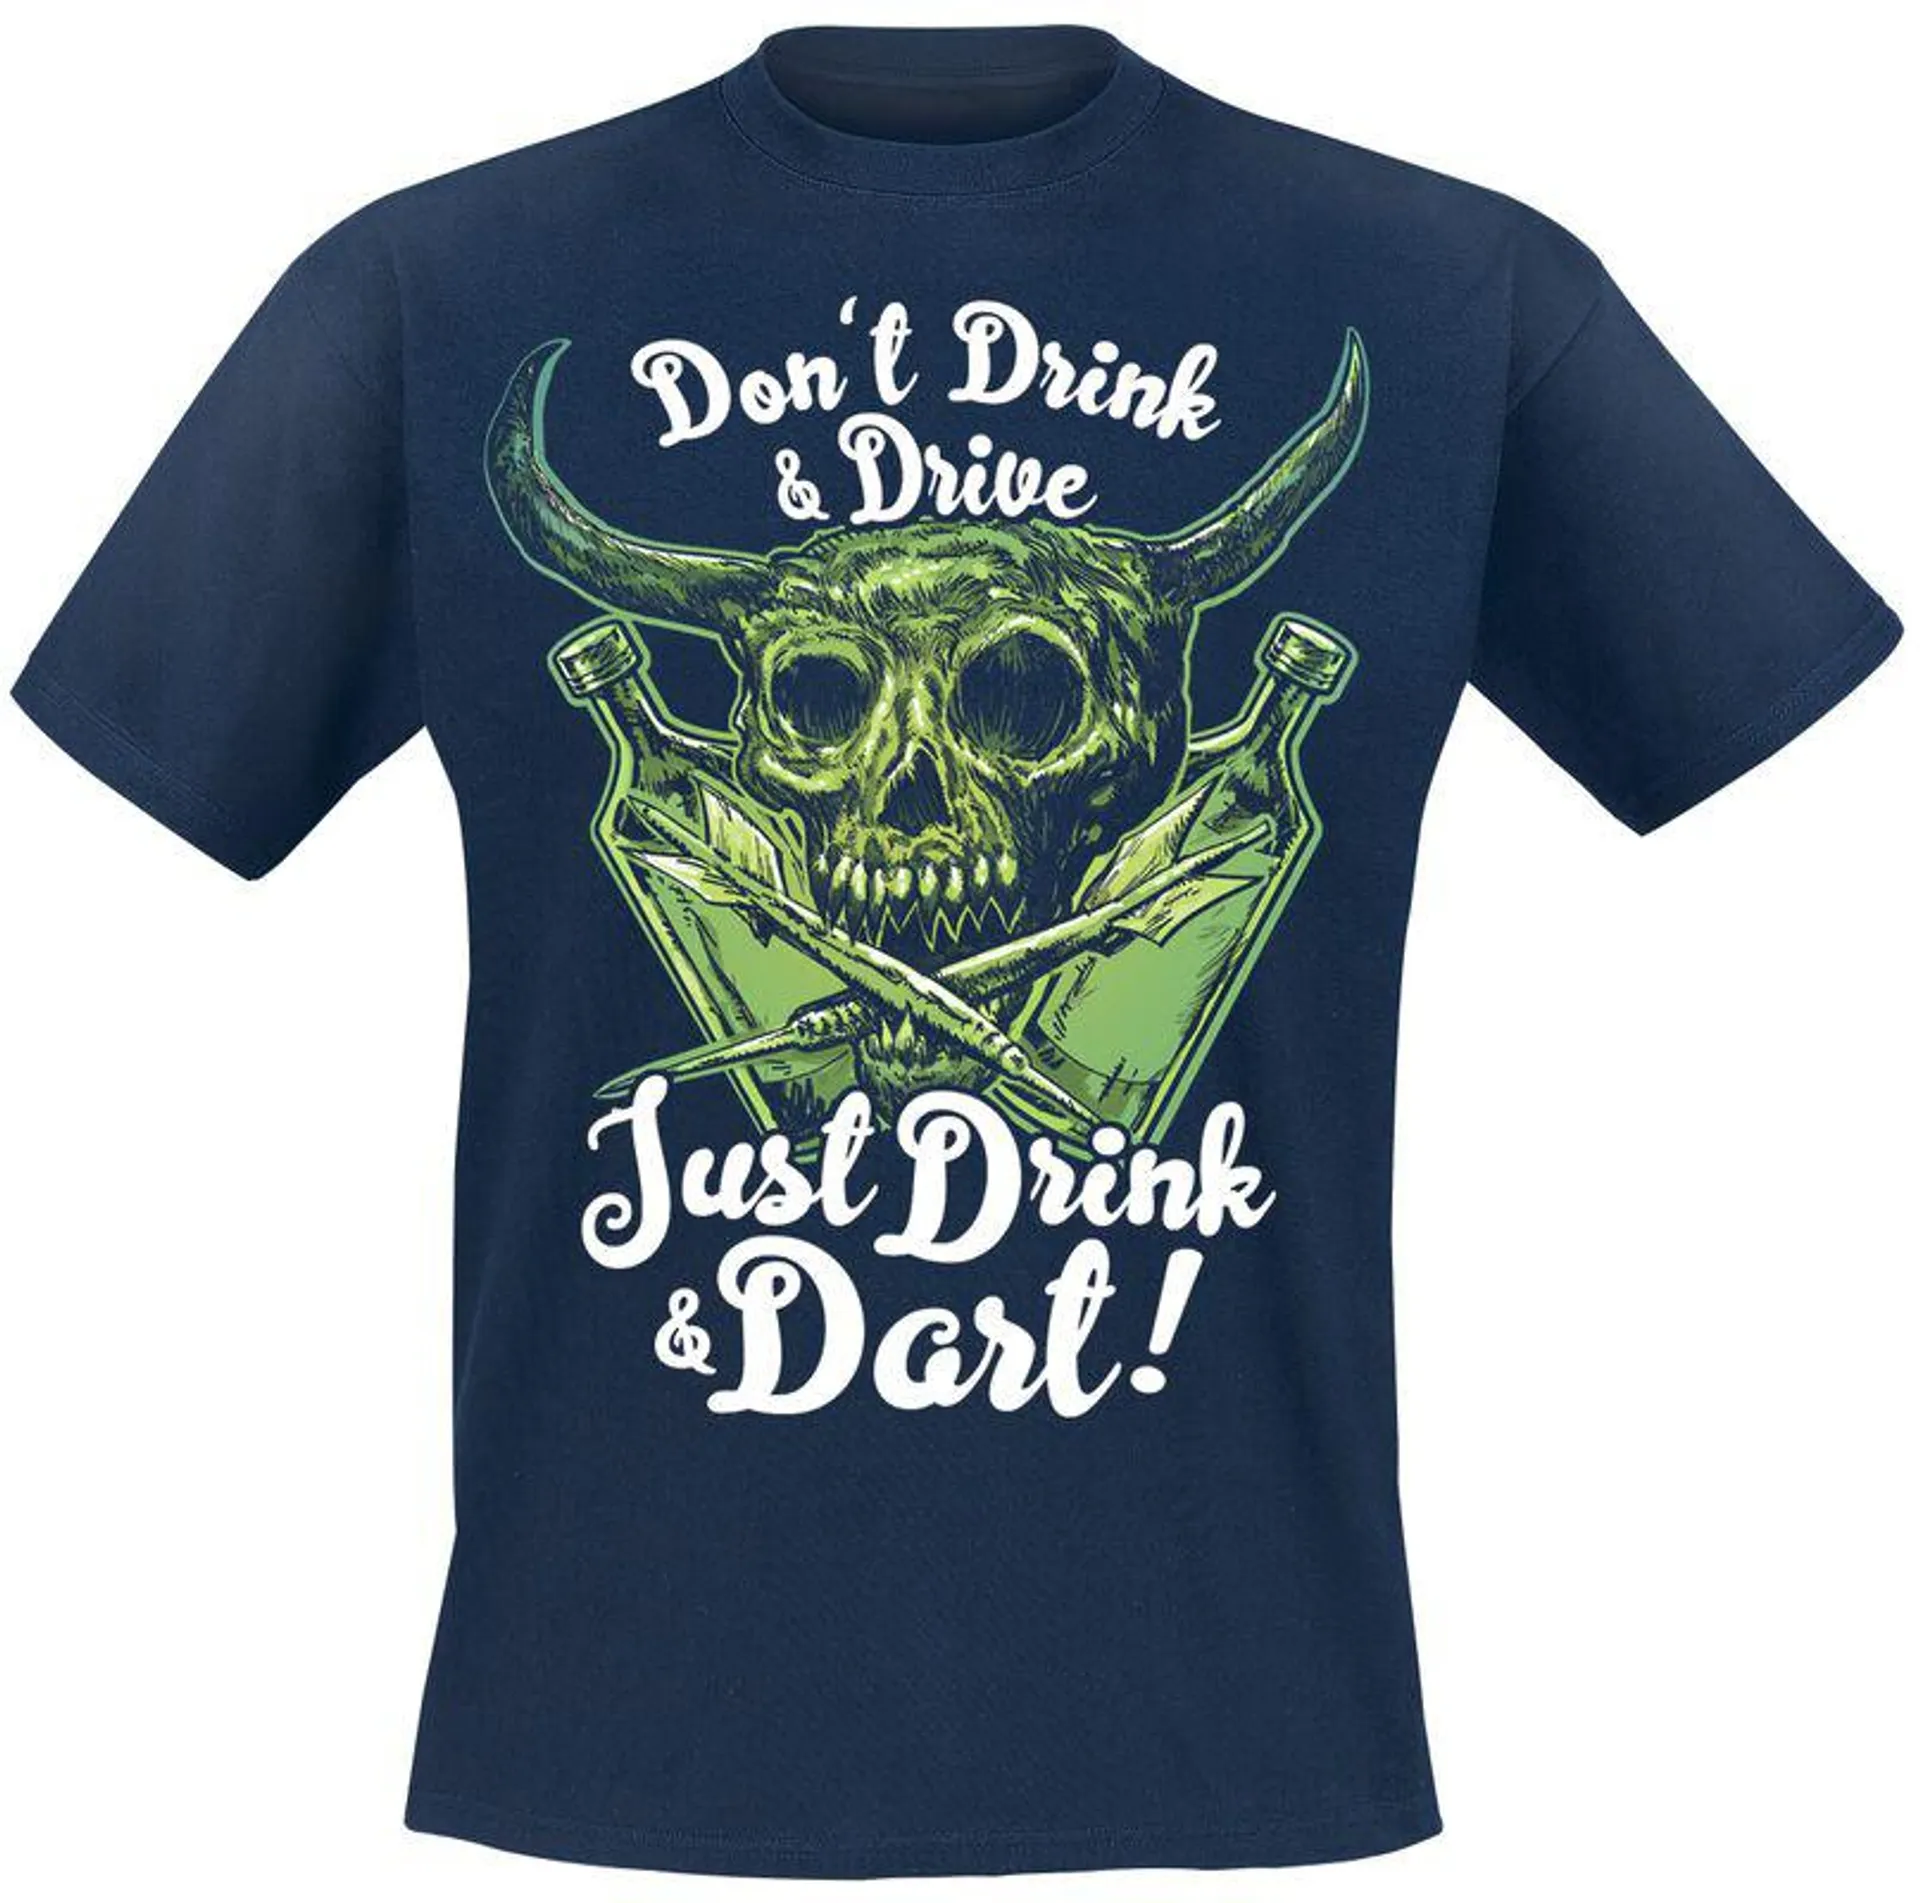 "Just Drink And Dart" Camiseta Azul marino de Darts